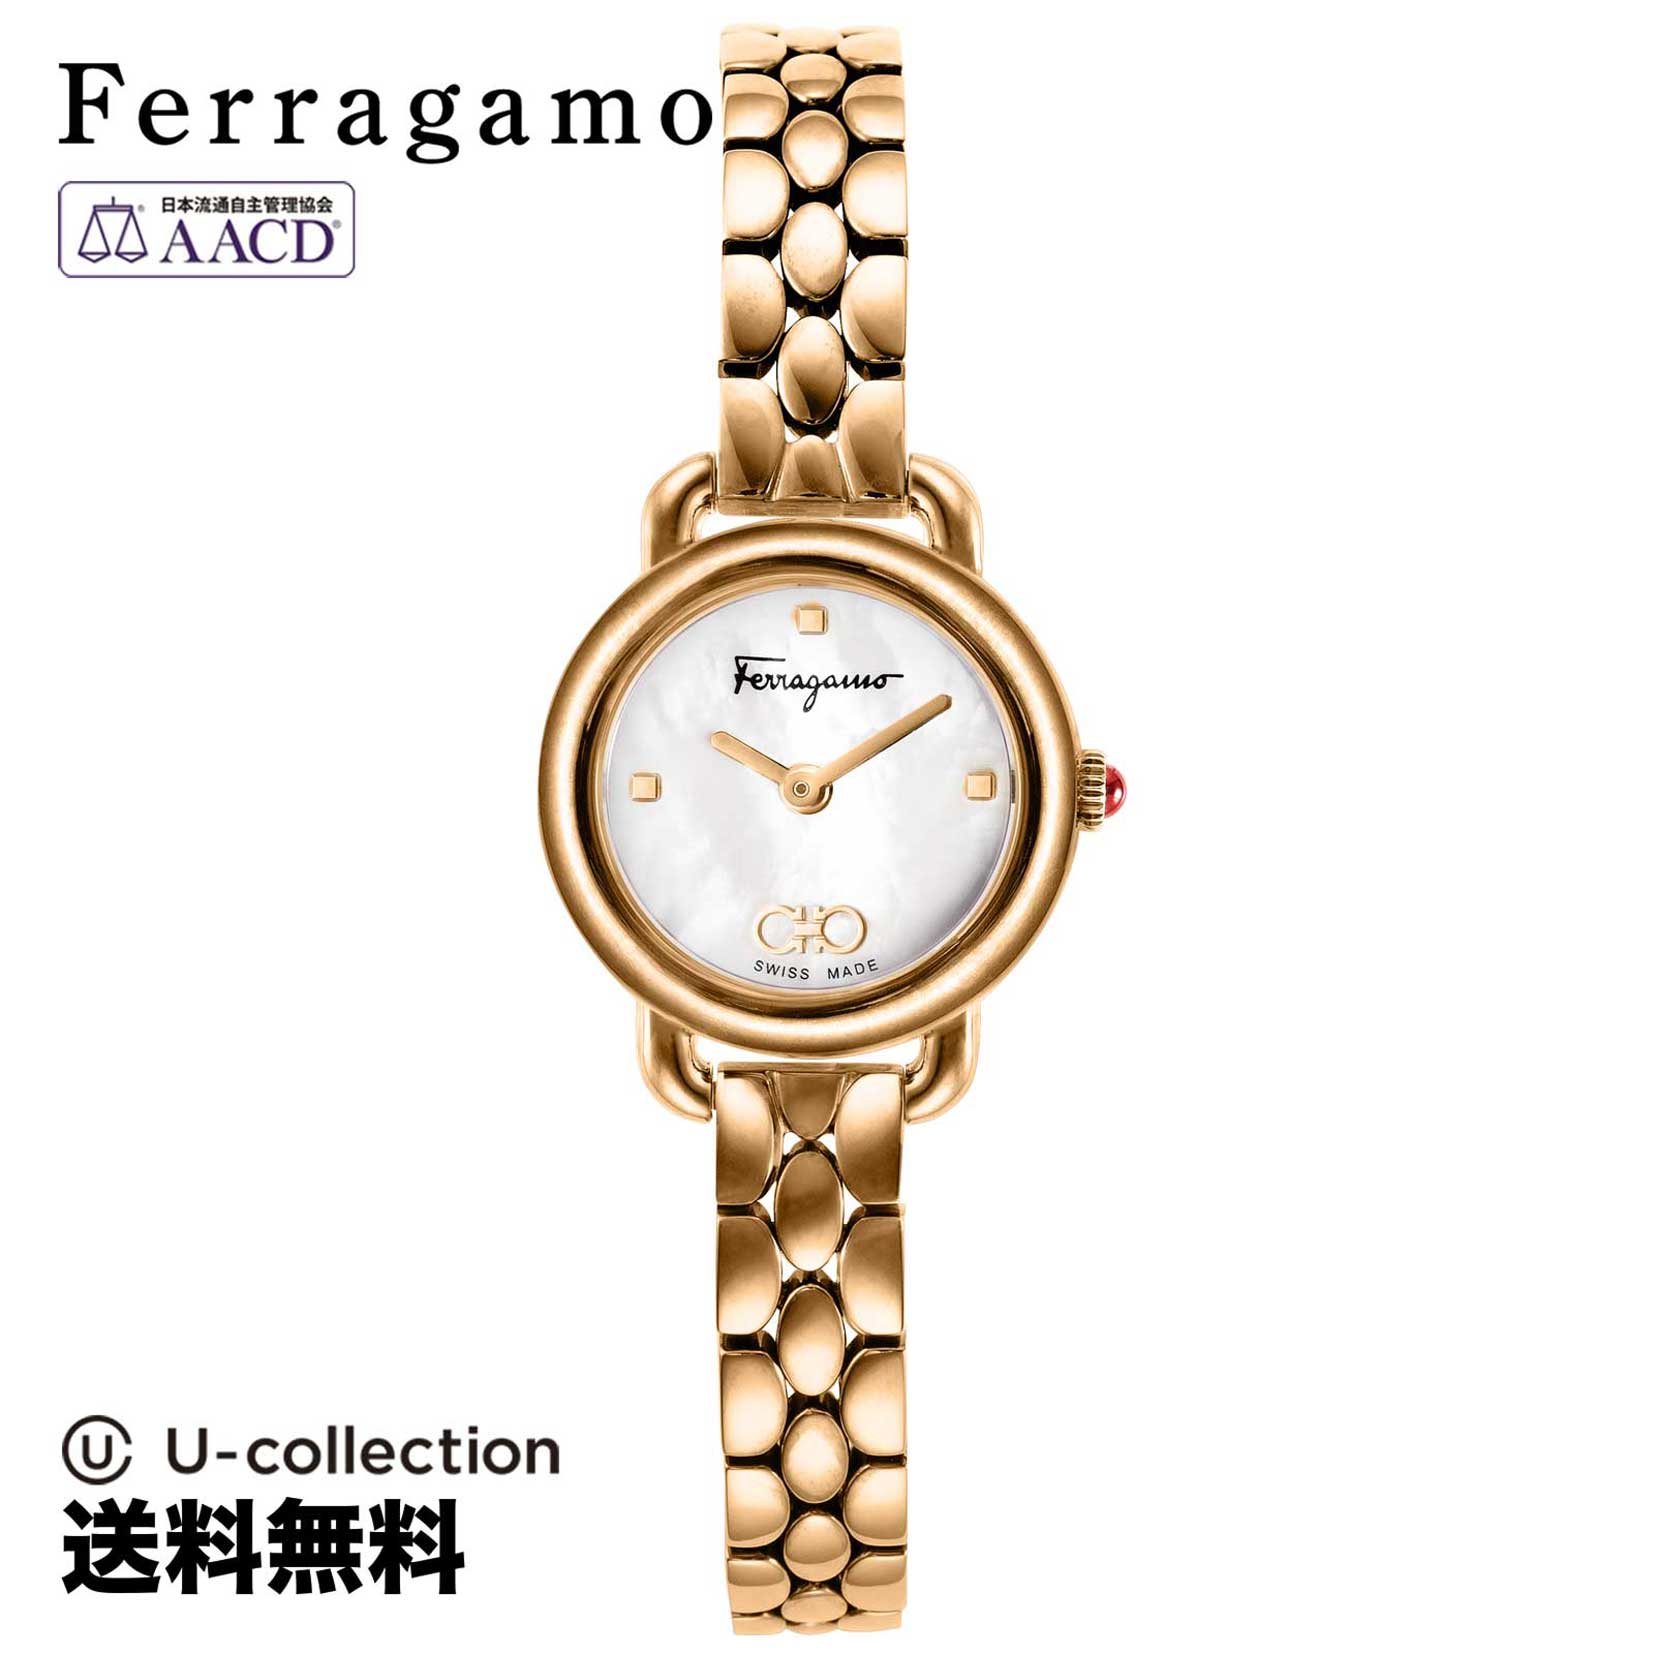 Ferragamo【腕時計】 Ferragamo(フェラガモ) VARINA / ヴァリナ レディース ホワイトパール クォーツ SFHT01622 時計 ブランド